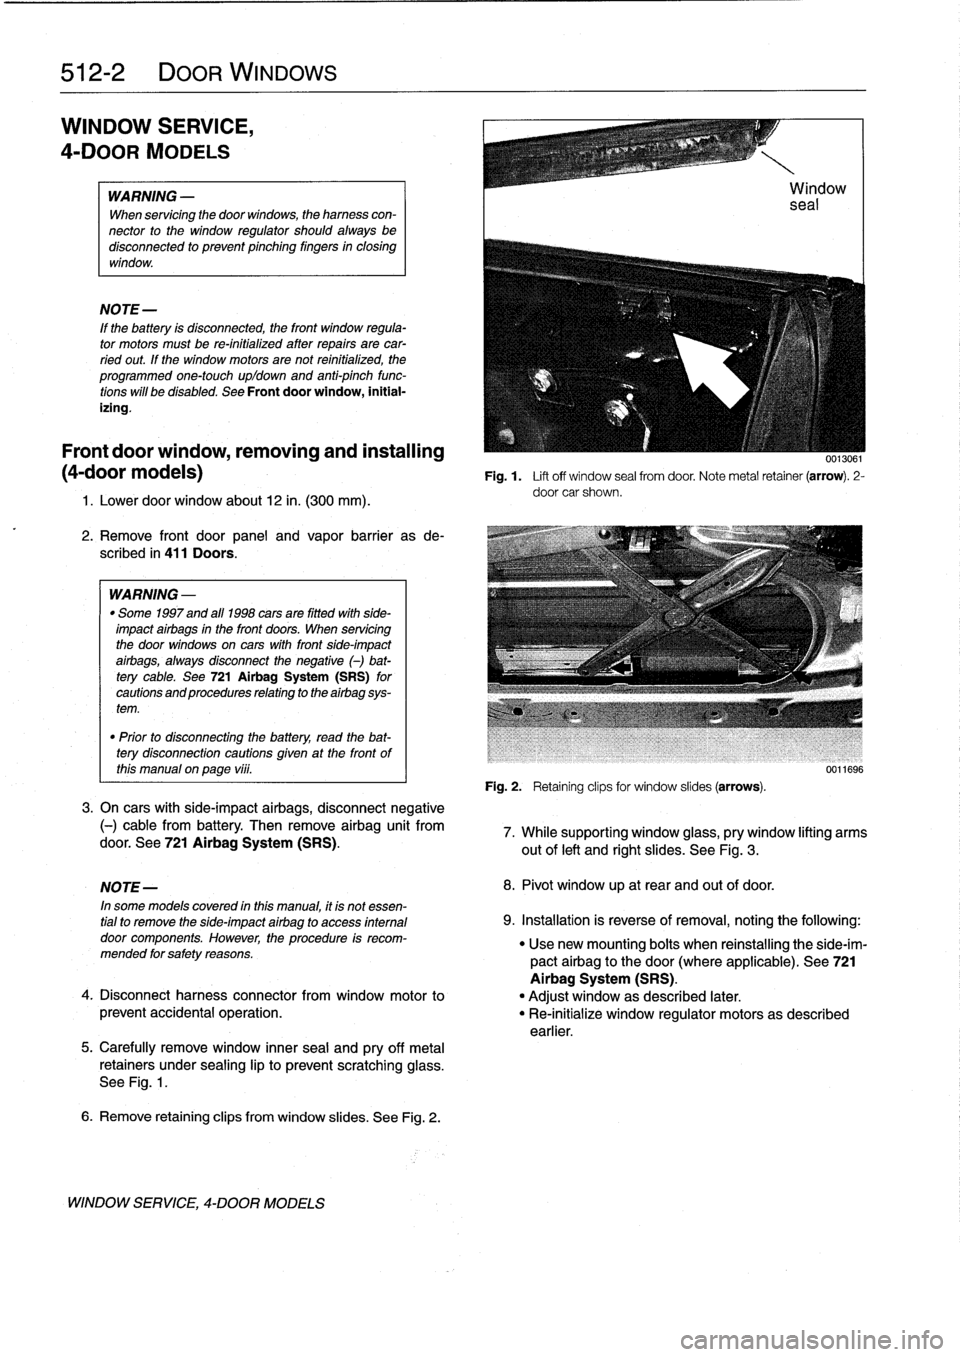 BMW M3 1995 E36 Workshop Manual 
512-2

	

DOOR
WINDOWS

WINDOW
SERVICE,

4-DOOR
MODELS

WARNING
-

When
servicing
the
door
wíndows,
theharness
con-
nector
to
the
window
regulator
shouldalways
be
disconnected
to
prevent
pinching
fi